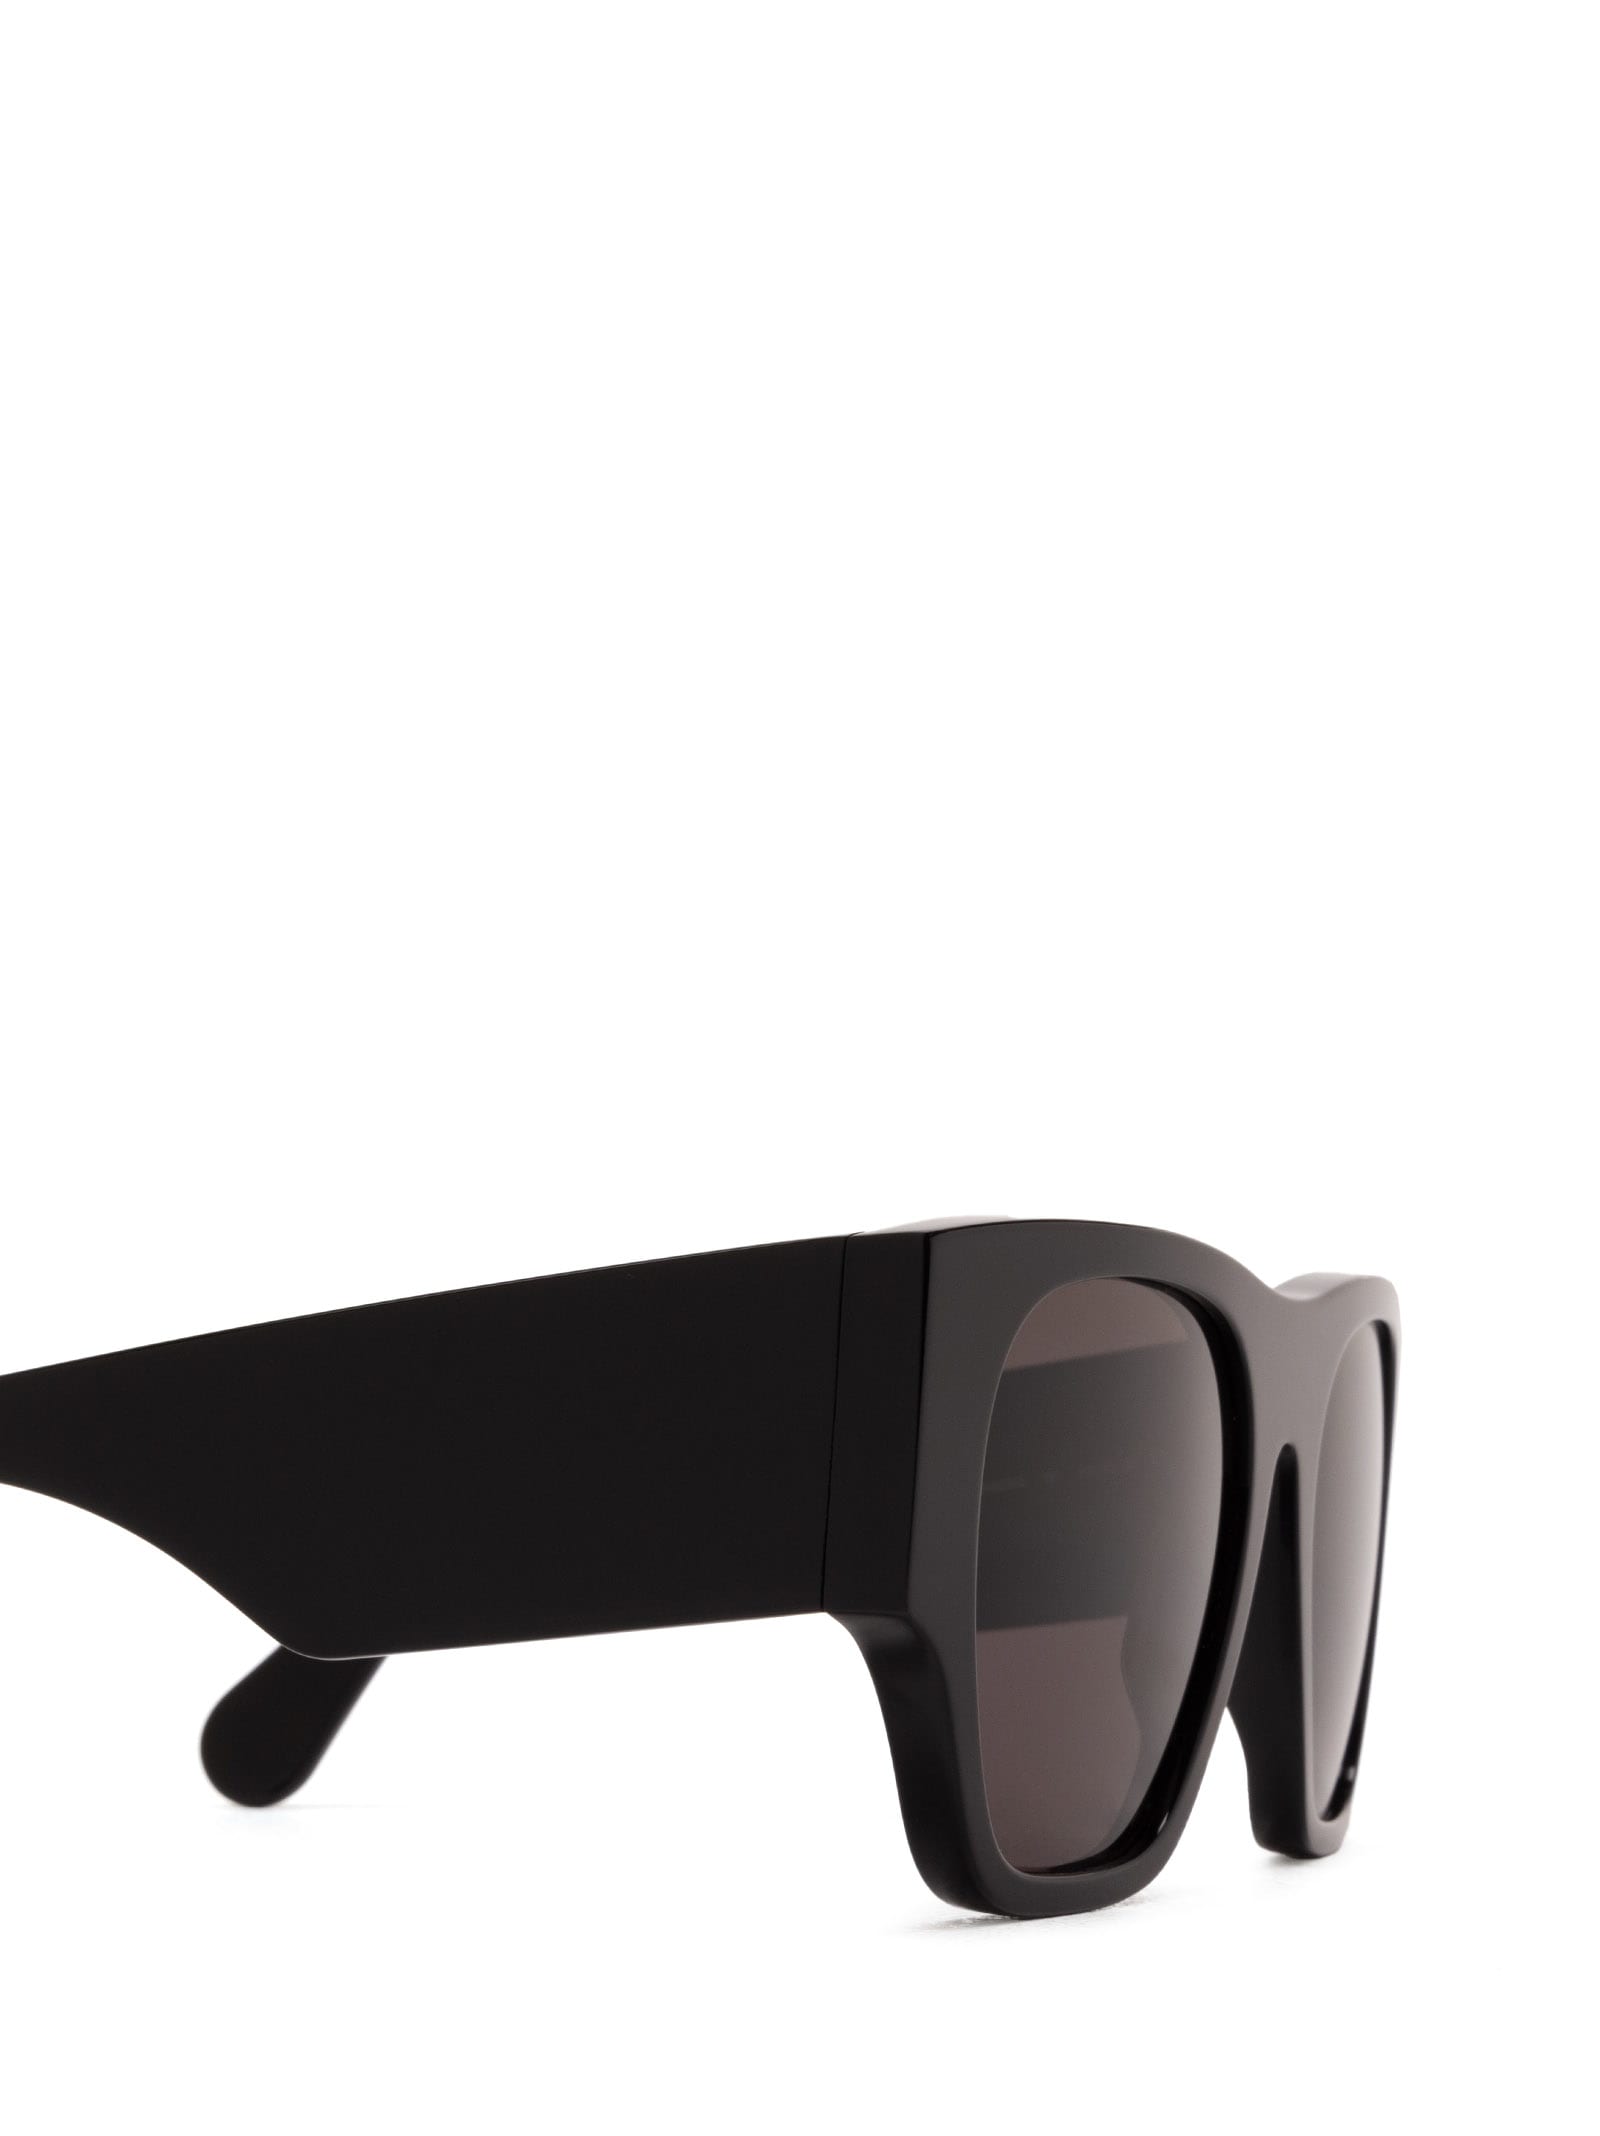 Shop Chloé Ch0233s Black Sunglasses